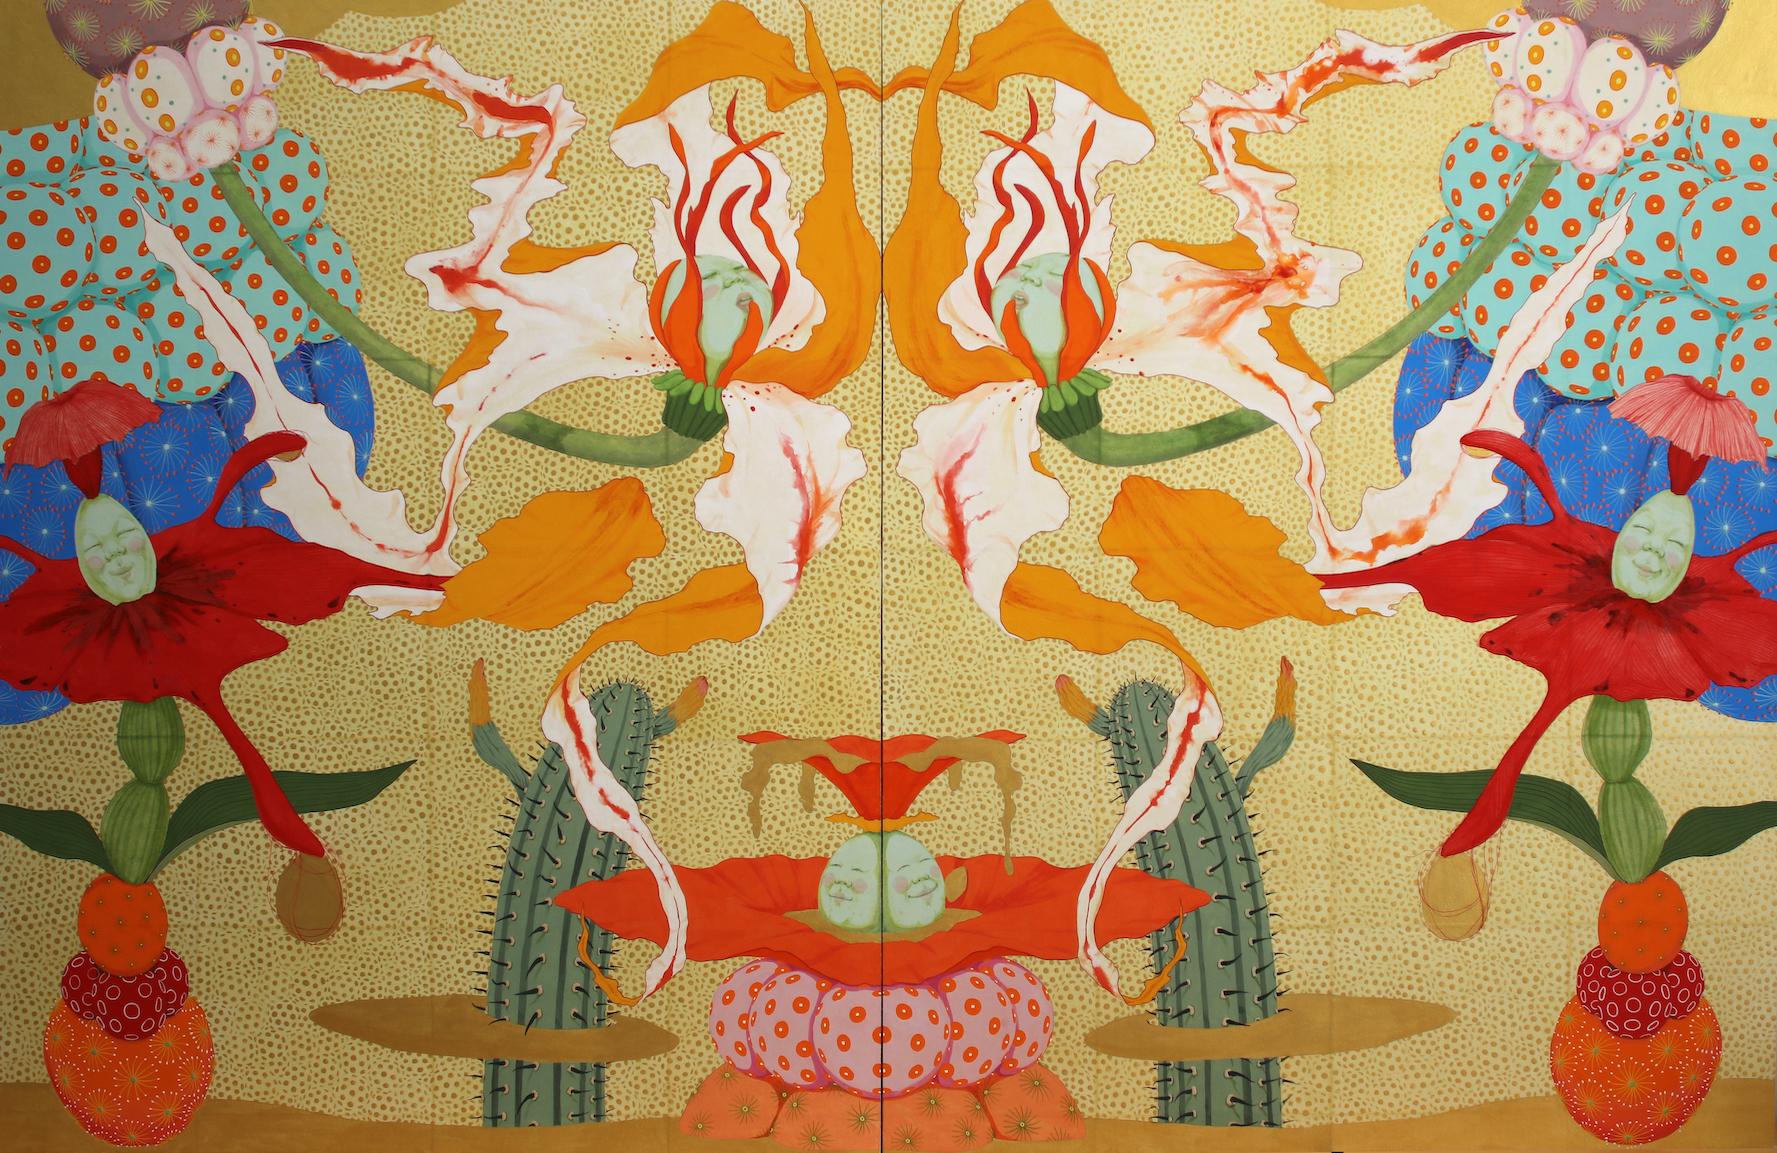 Figurative Print Mari Ito - Alegría II (Diptyque) - 21 C., Contemporary, Japanese, Fantasy, Natural Materials